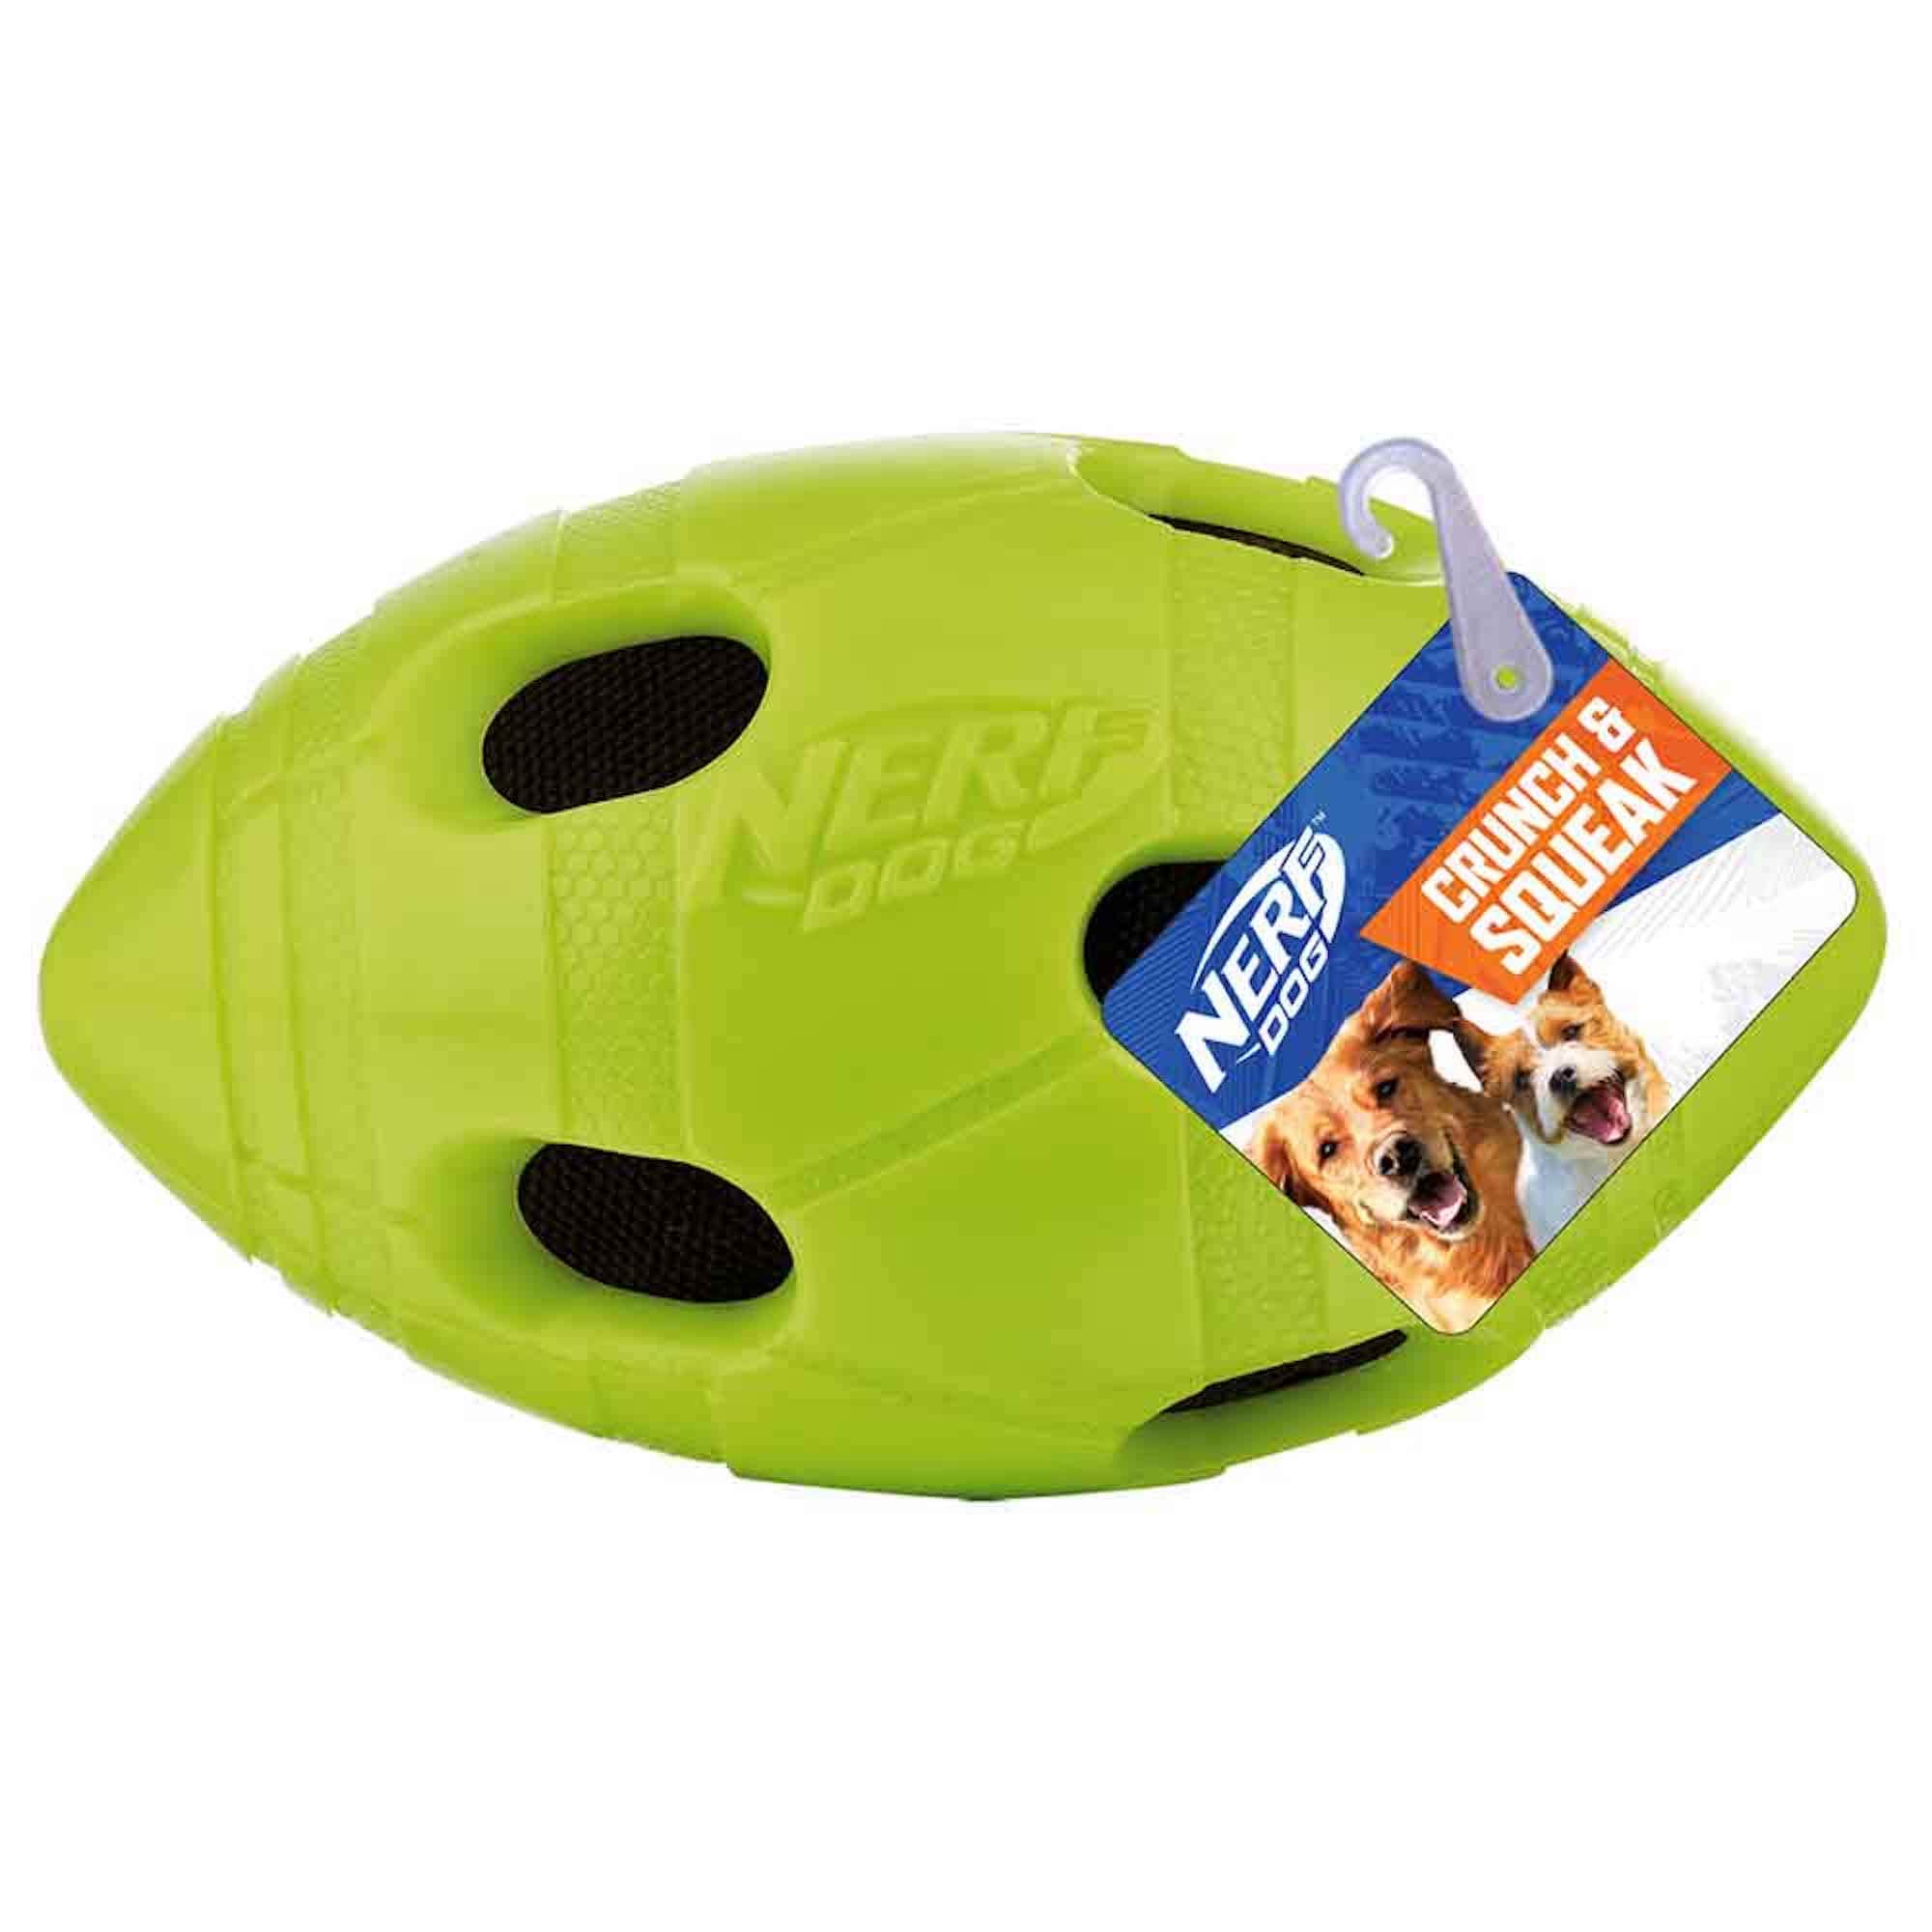 Nerf Treat Dispenser Ball Dog Toy, Small